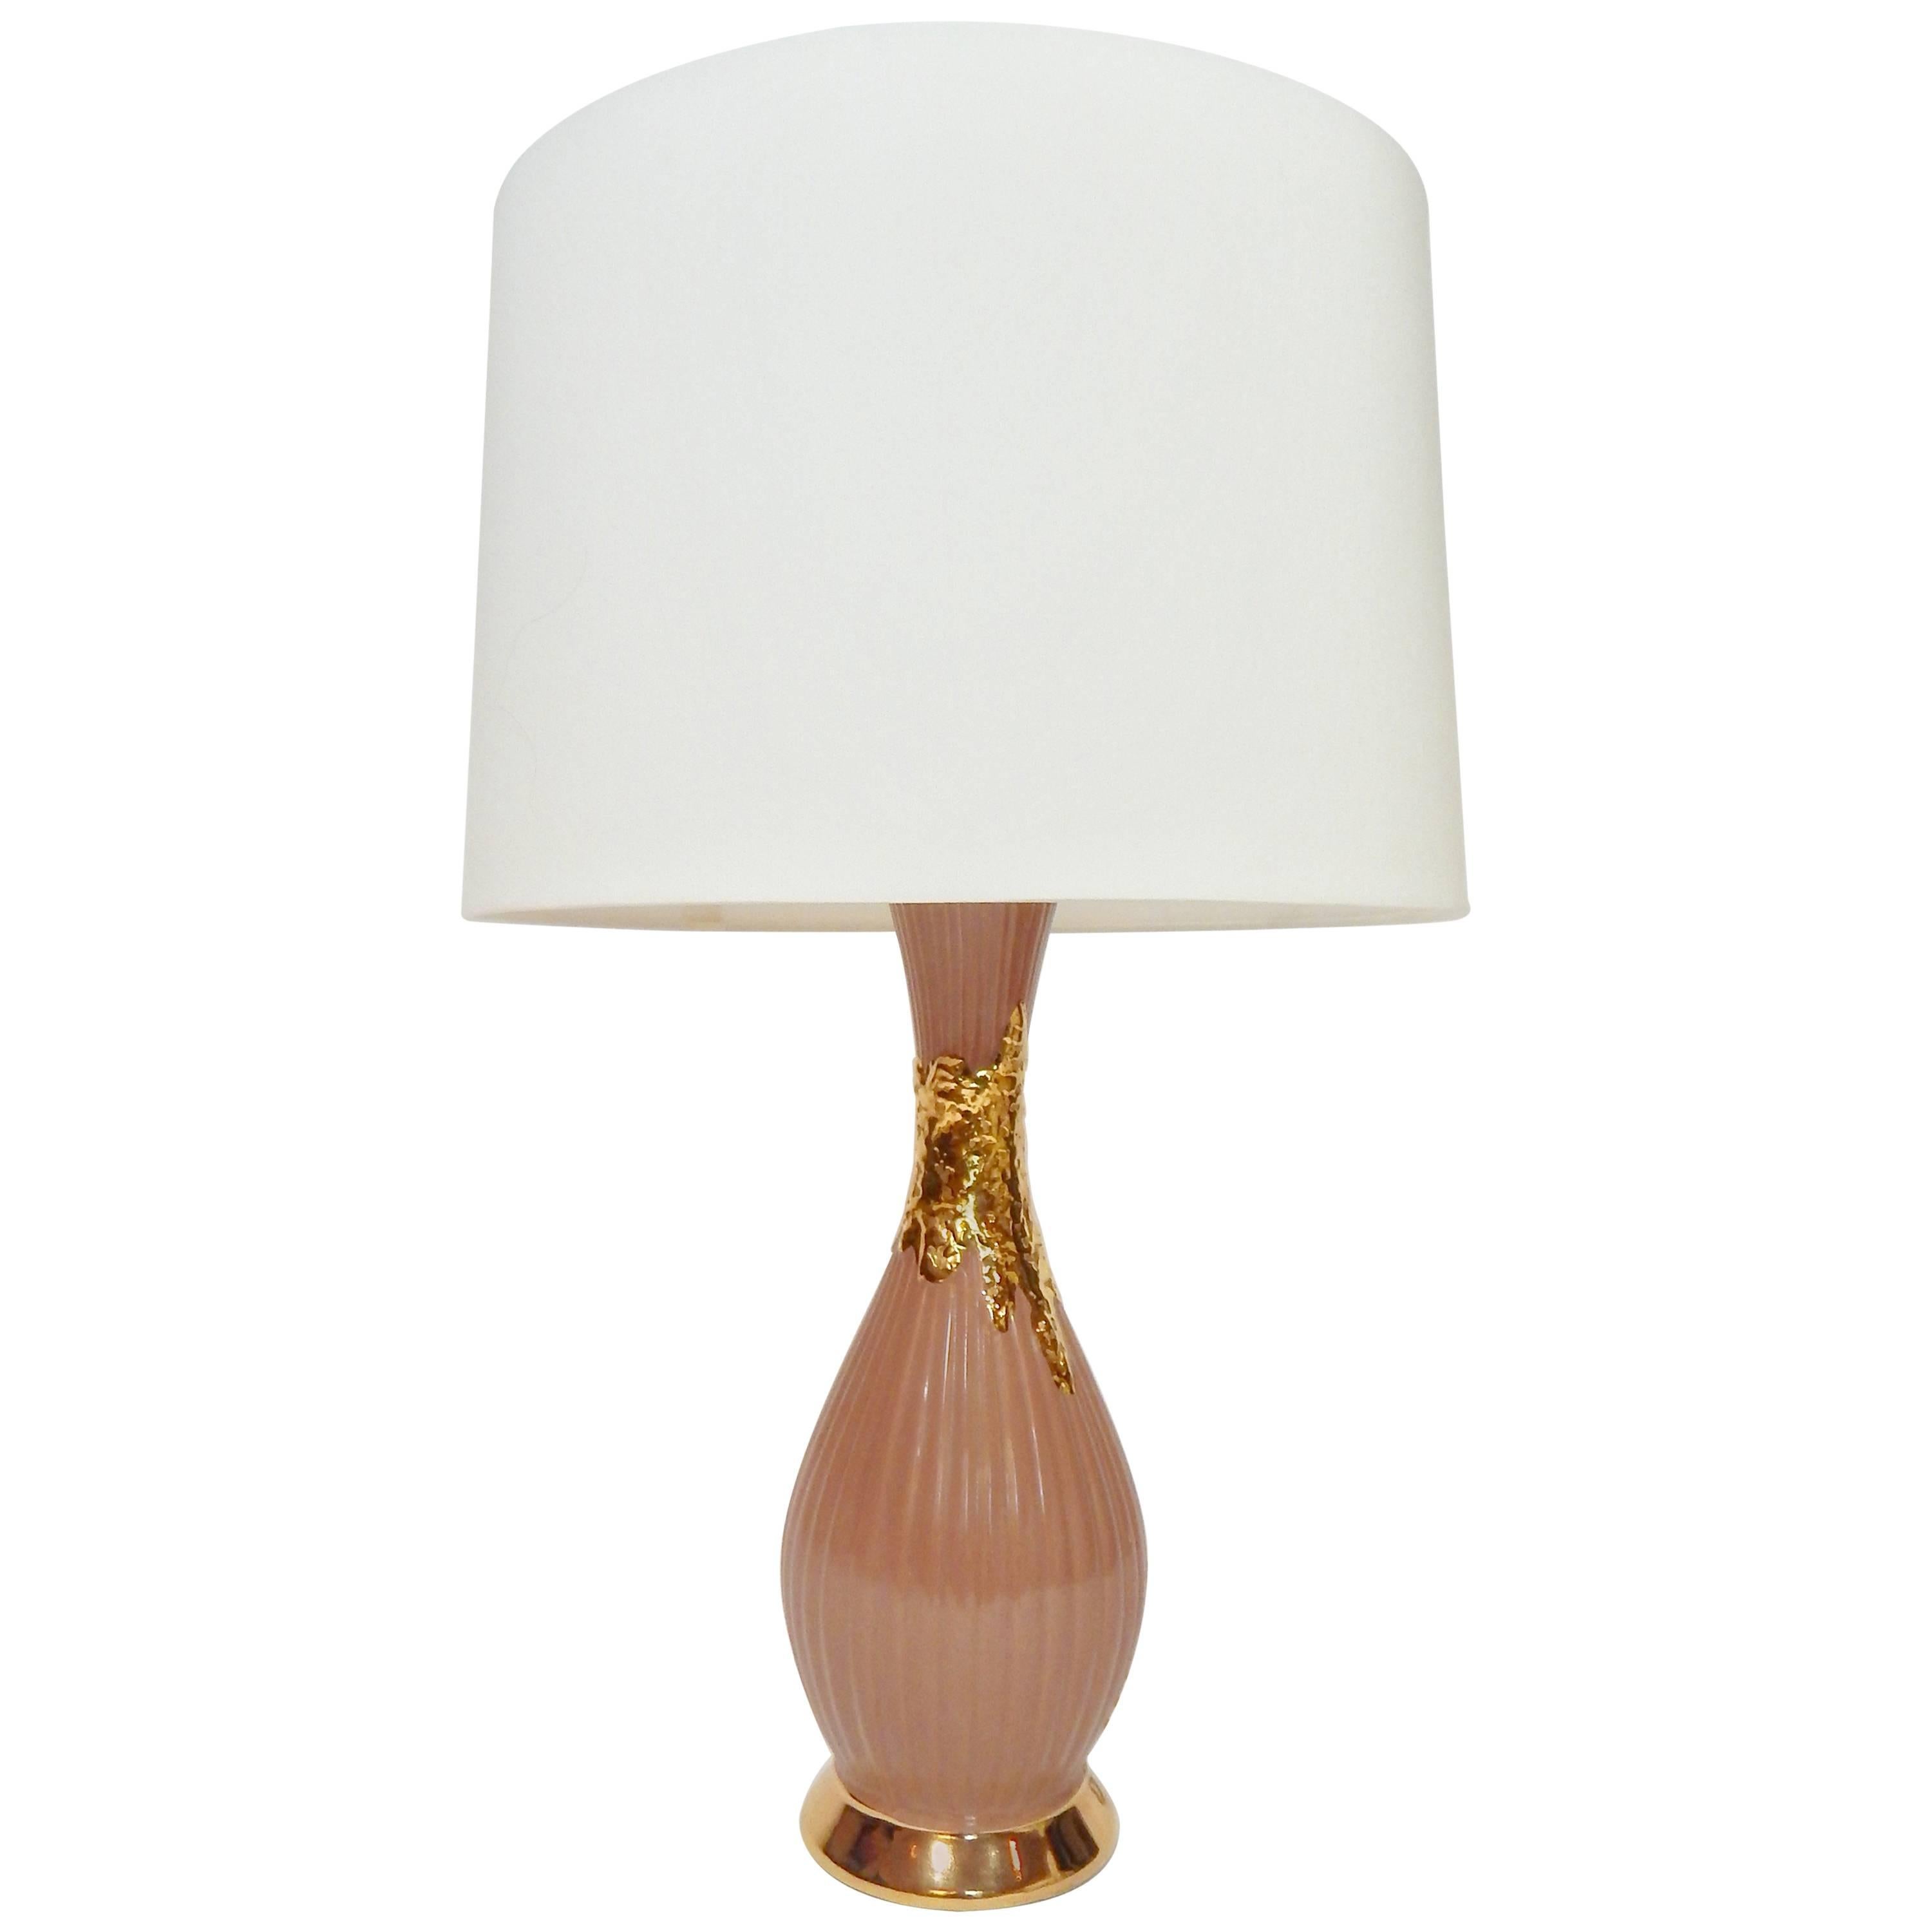 1950s Glamorous Gold and Mauve Glazed Ceramic Table Lamp